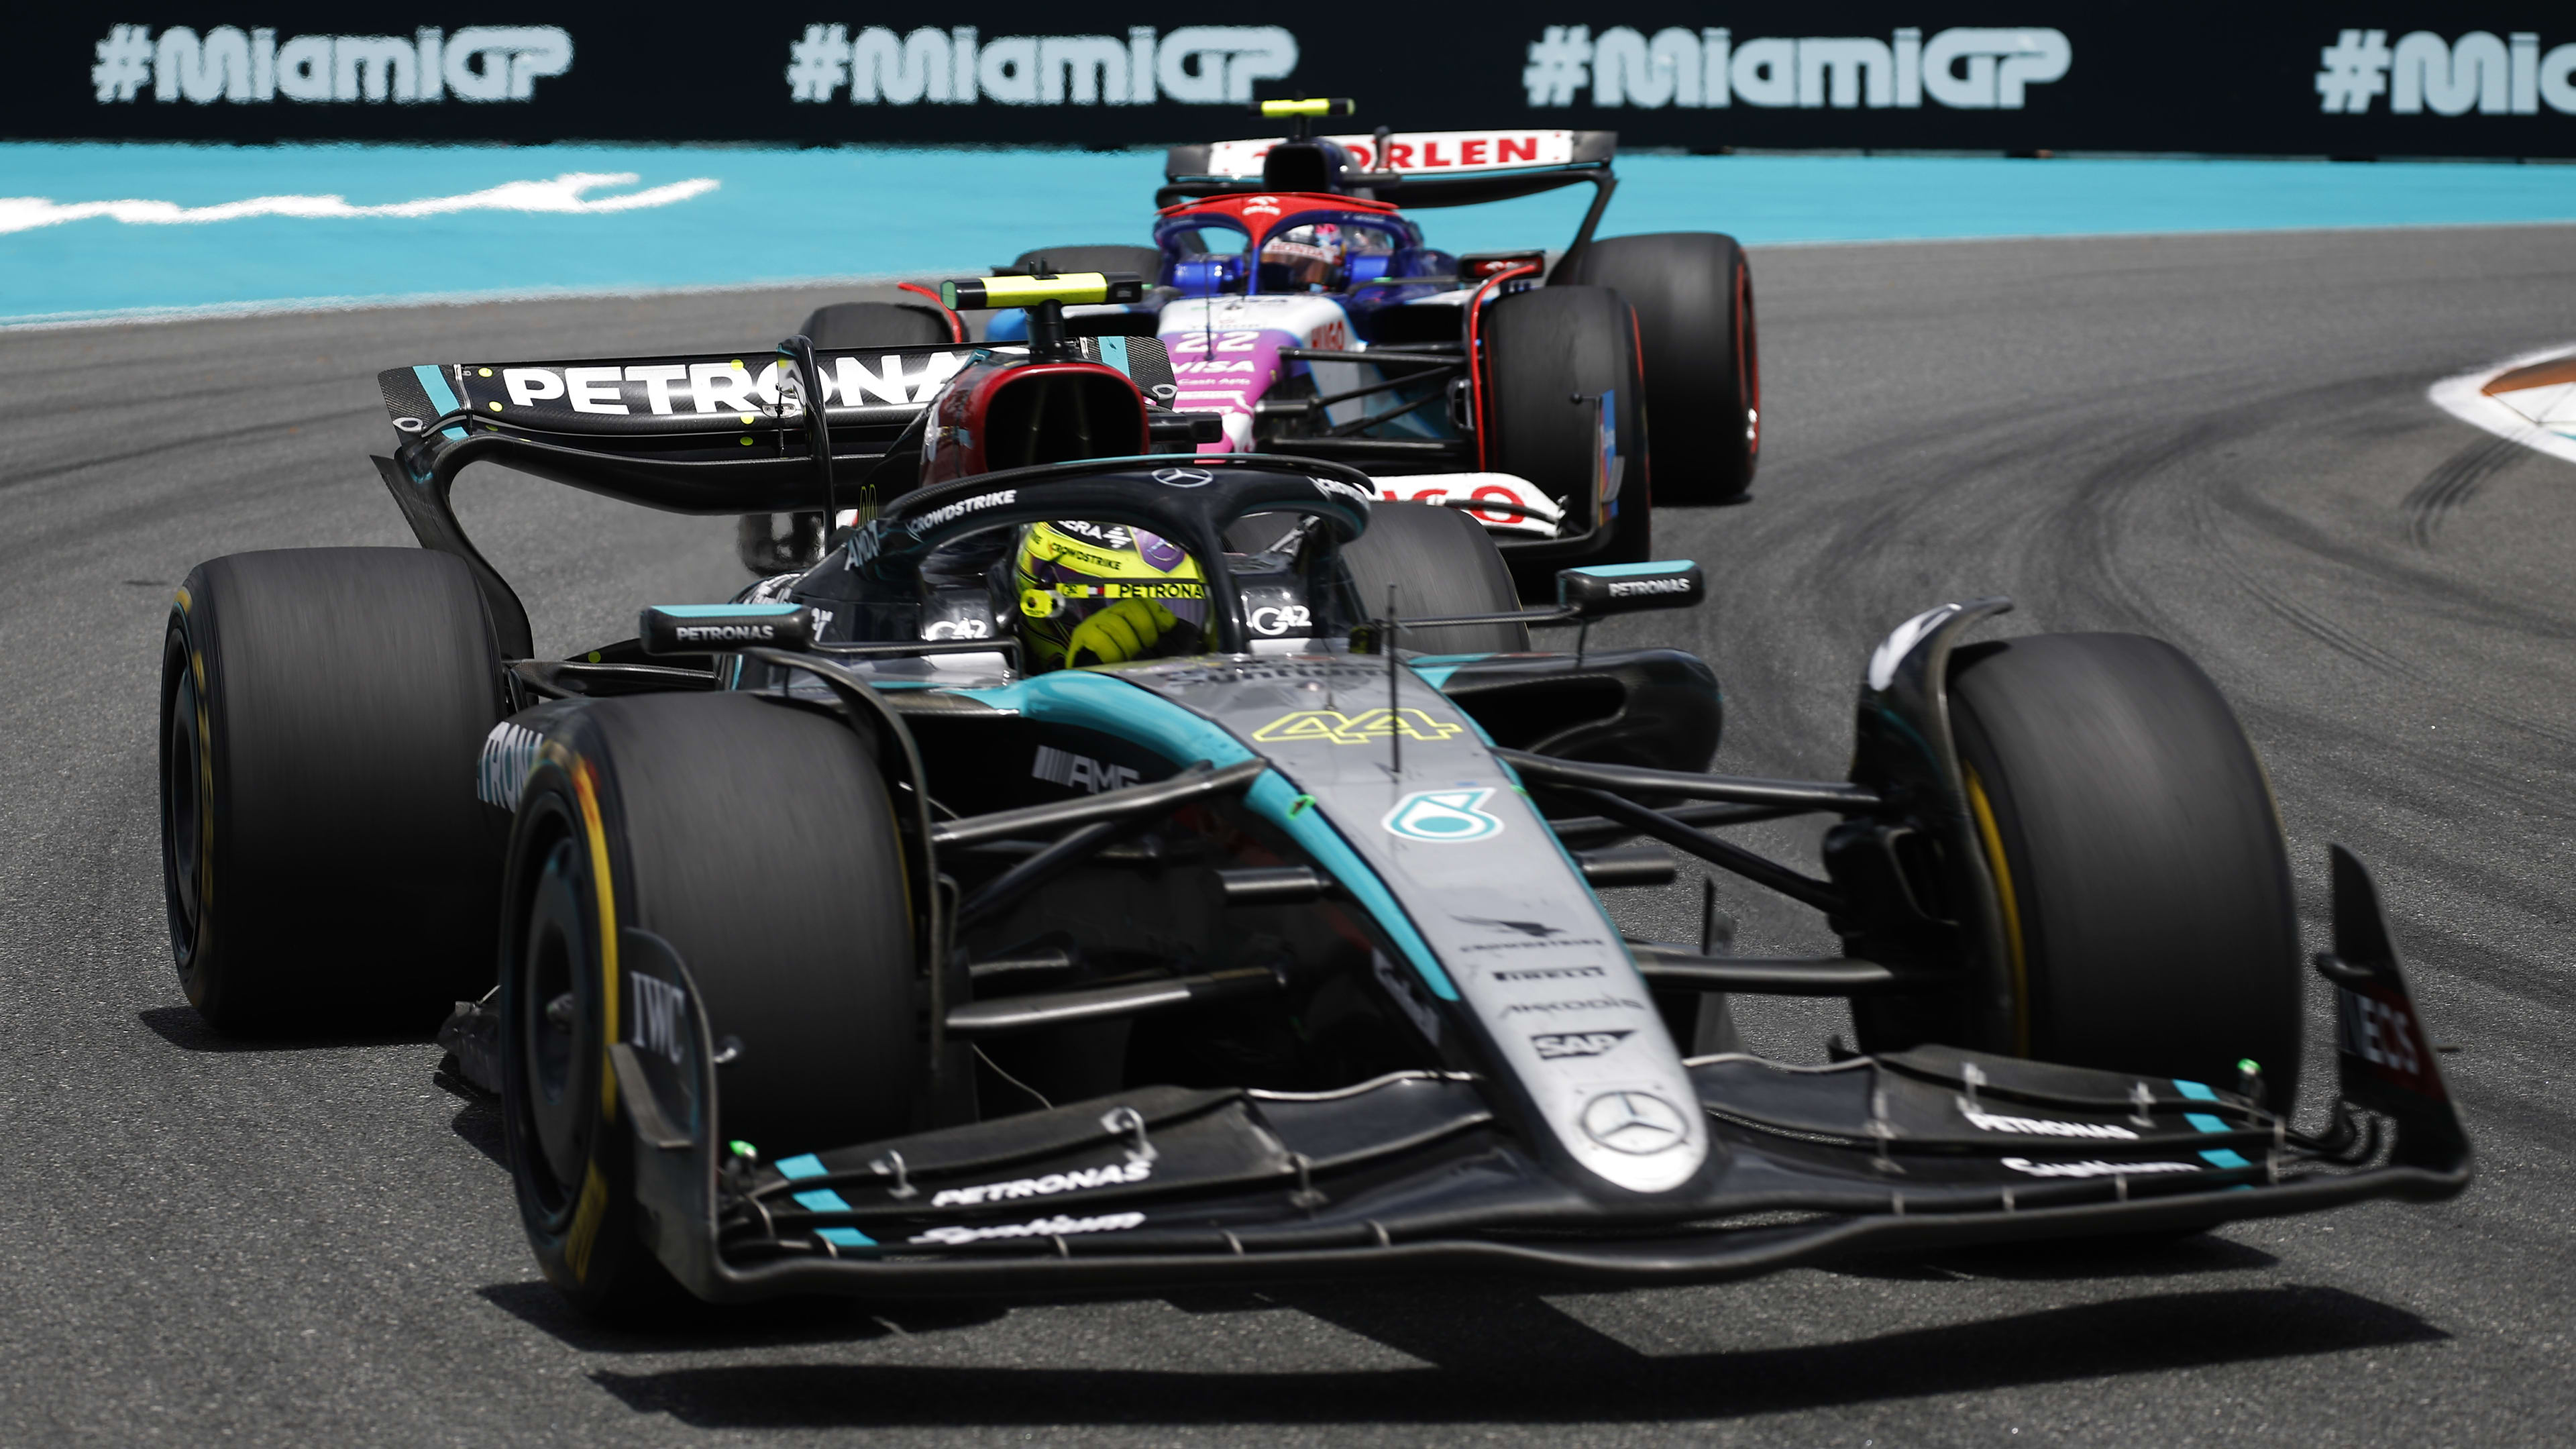 MIAMI, FLORIDA - MAY 04: Lewis Hamilton of Great Britain driving the (44) Mercedes AMG Petronas F1